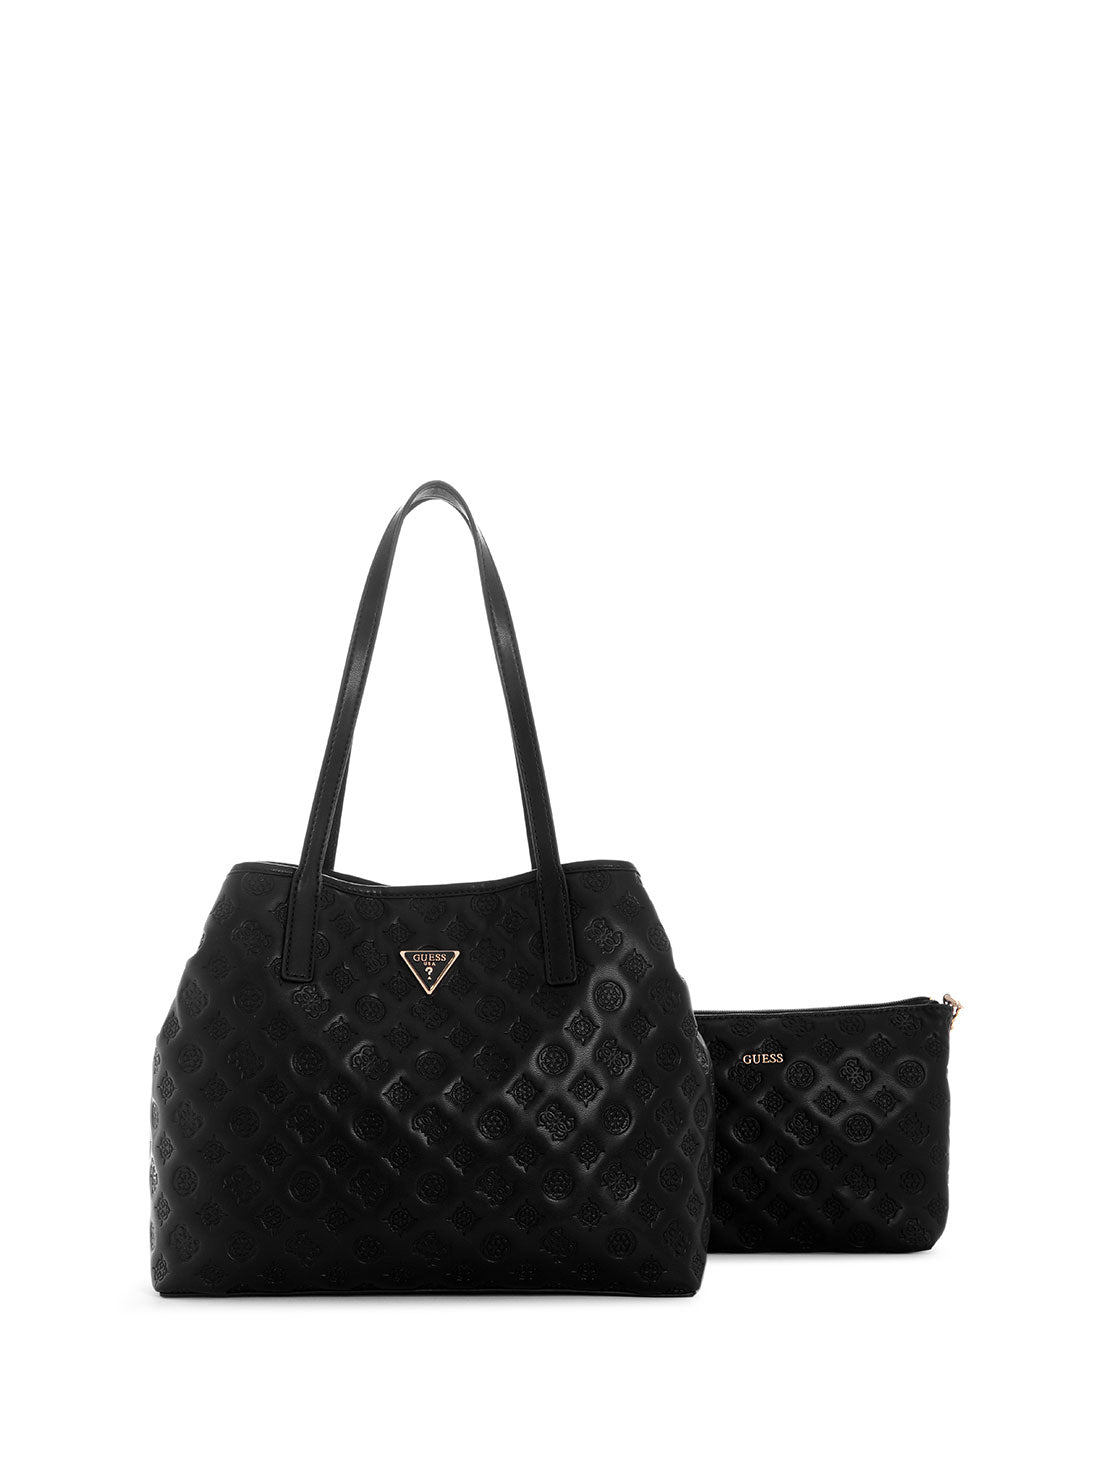 GUESS Women's Black La Femme Vikky Tote Bag LF699523 Full View